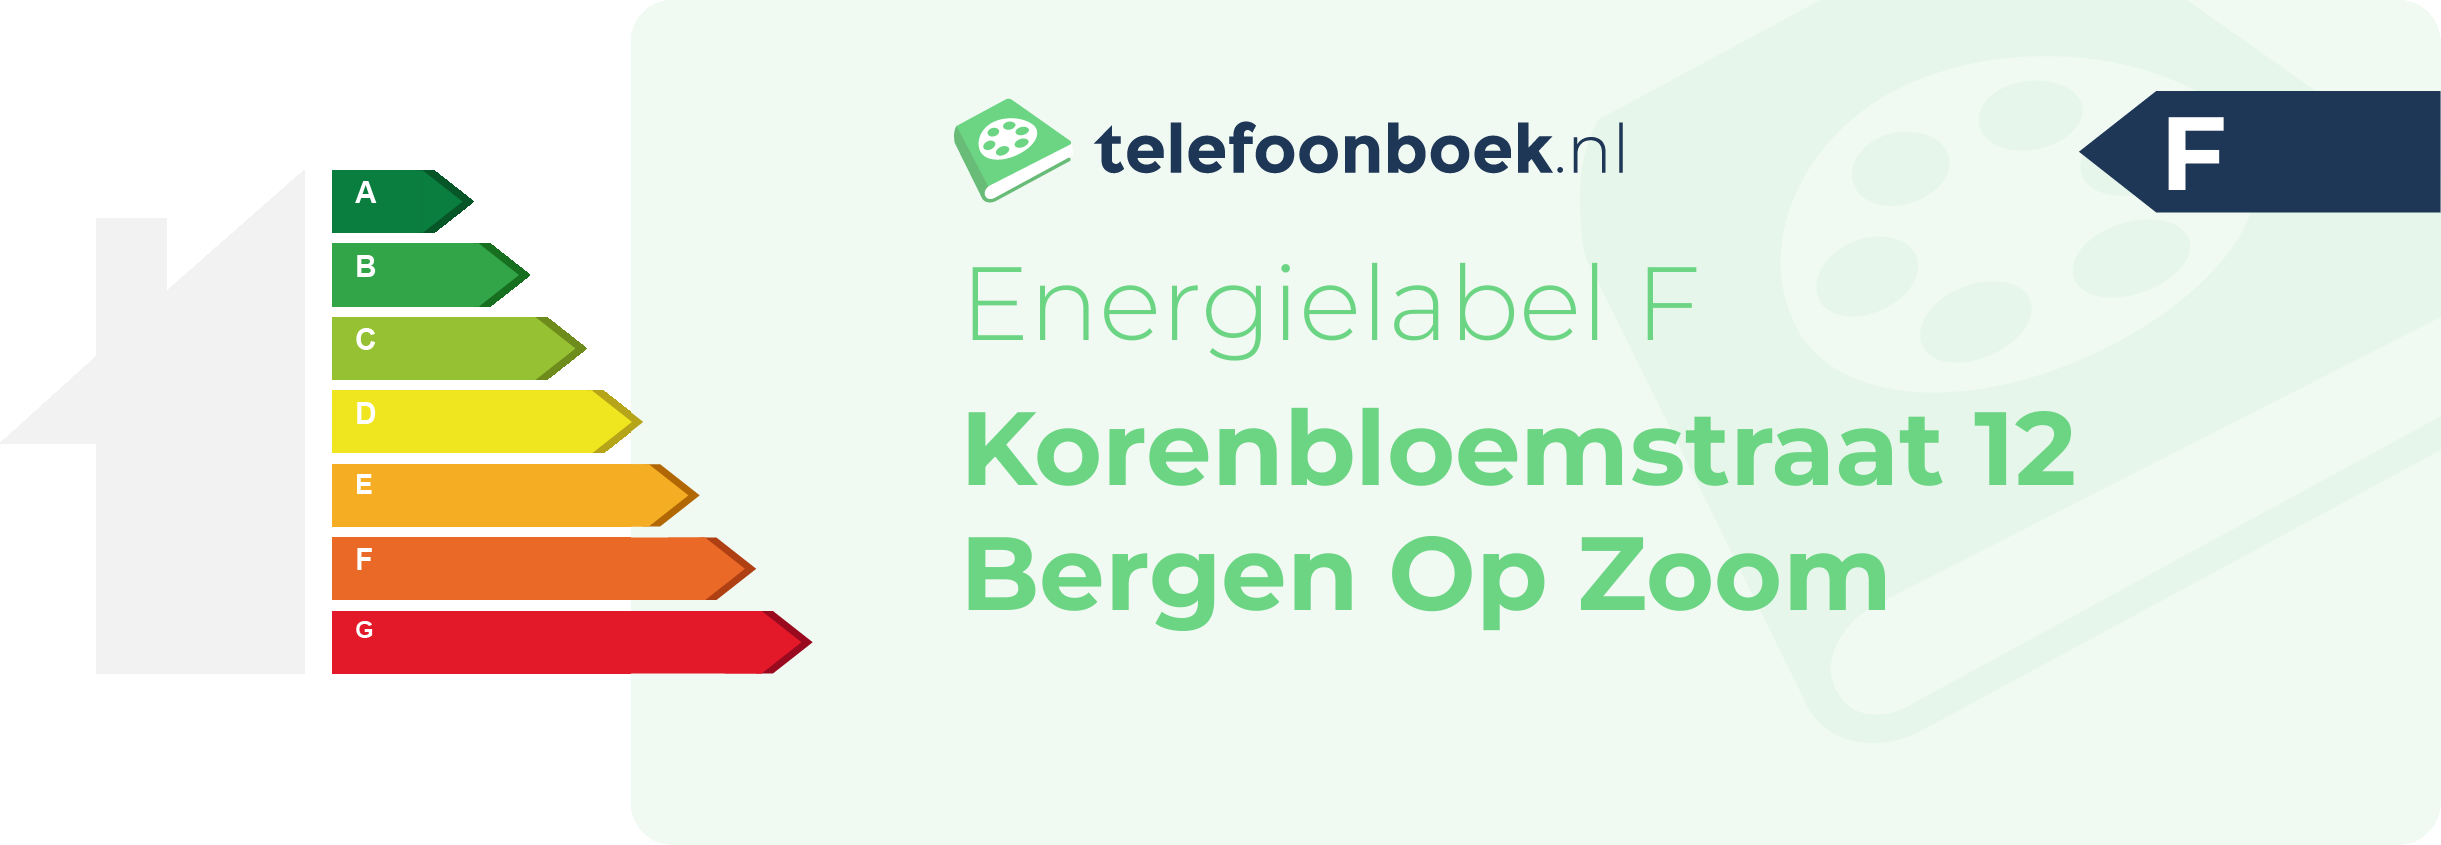 Energielabel Korenbloemstraat 12 Bergen Op Zoom